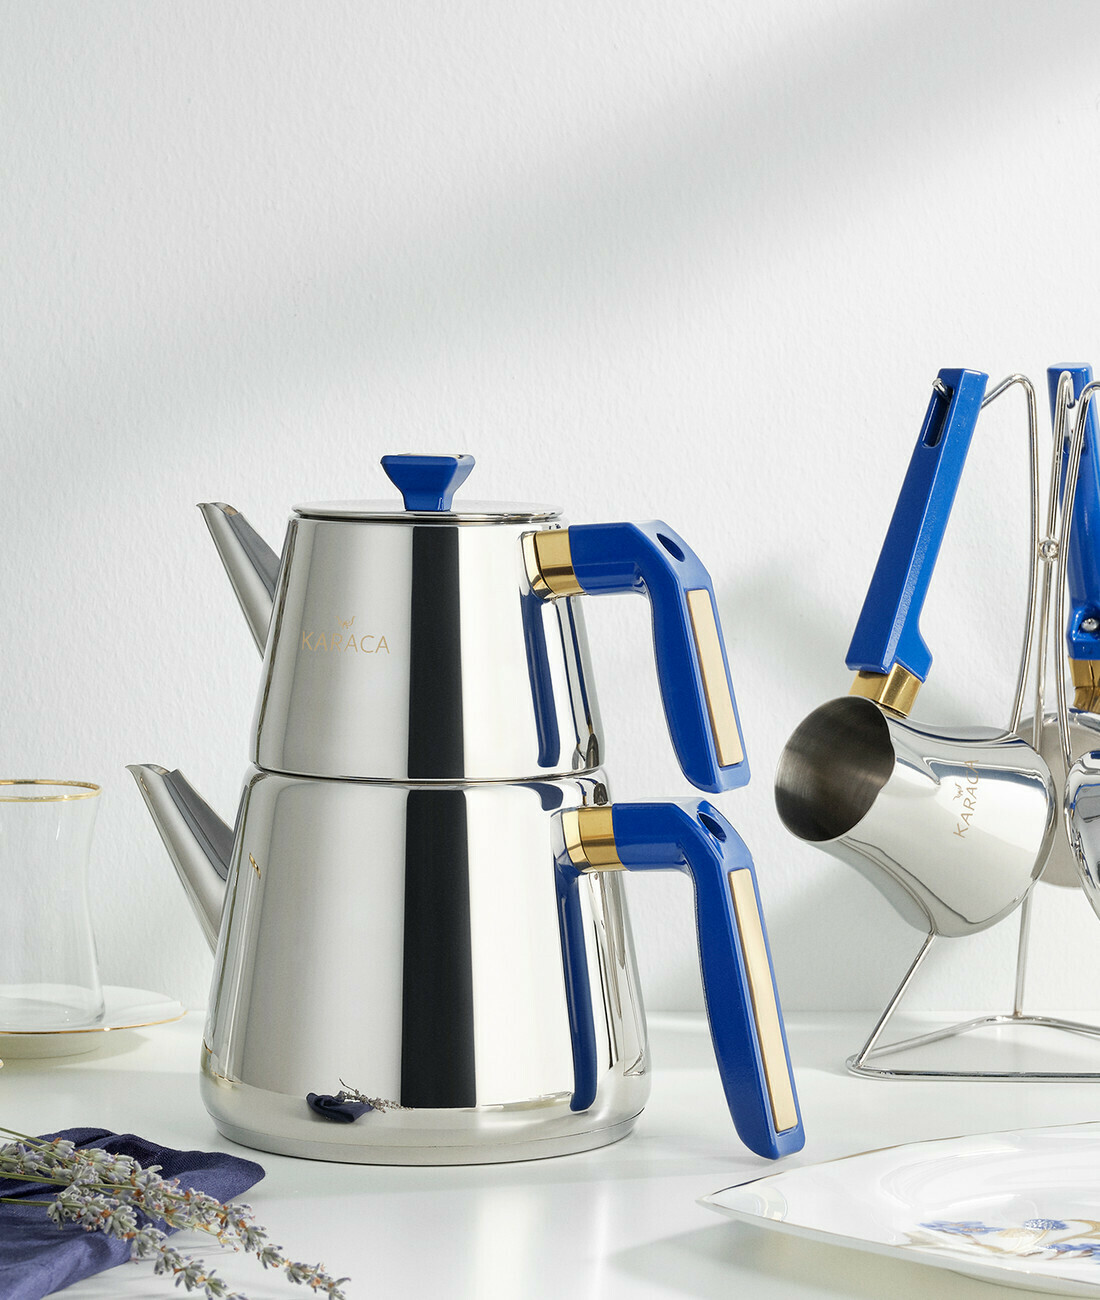 KARACA Piramit Tea Pot - Teapots - Caydanlik Medium Dark Blue Tea Pot -  Teapots - Caydanlik